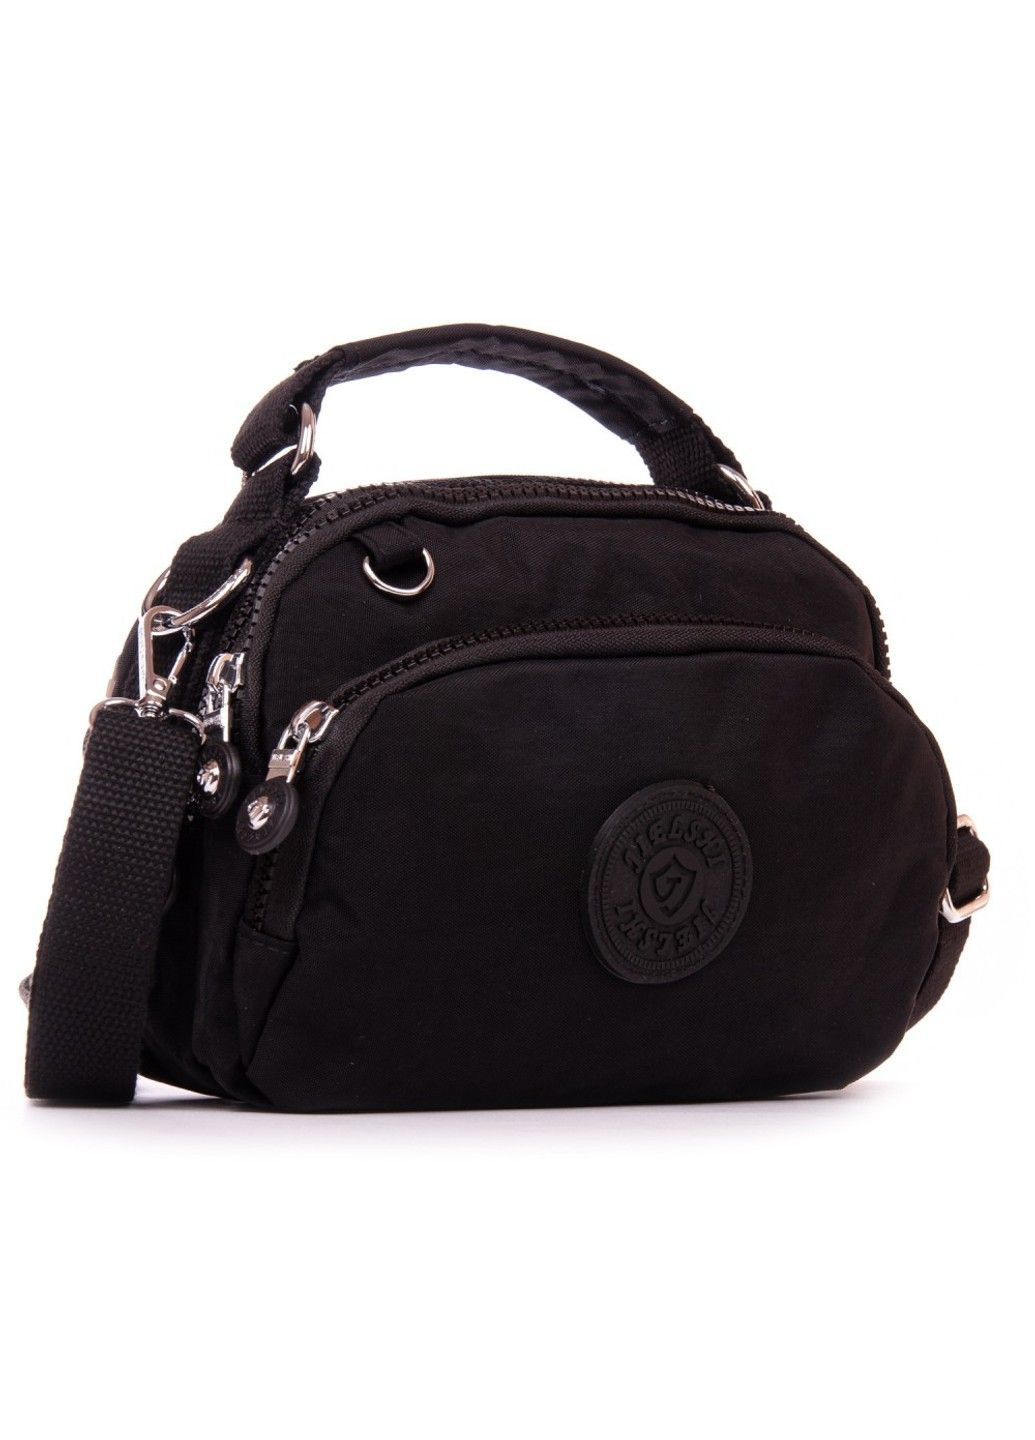 Женская летняя тканевая сумка 1130 black Jielshi (293765339)